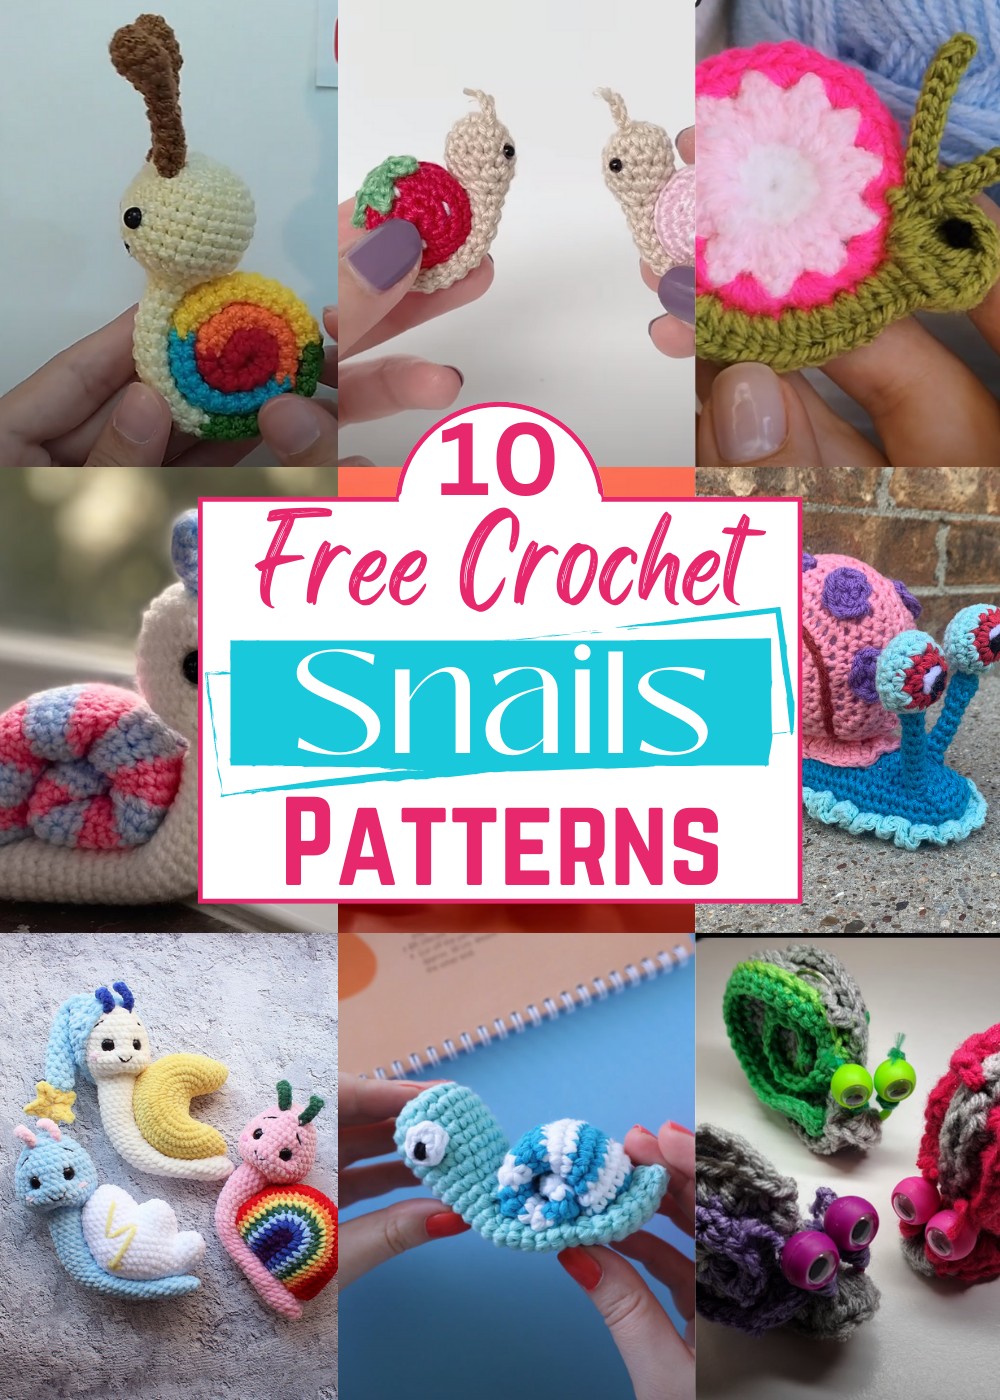 Crochet Snails Patterns